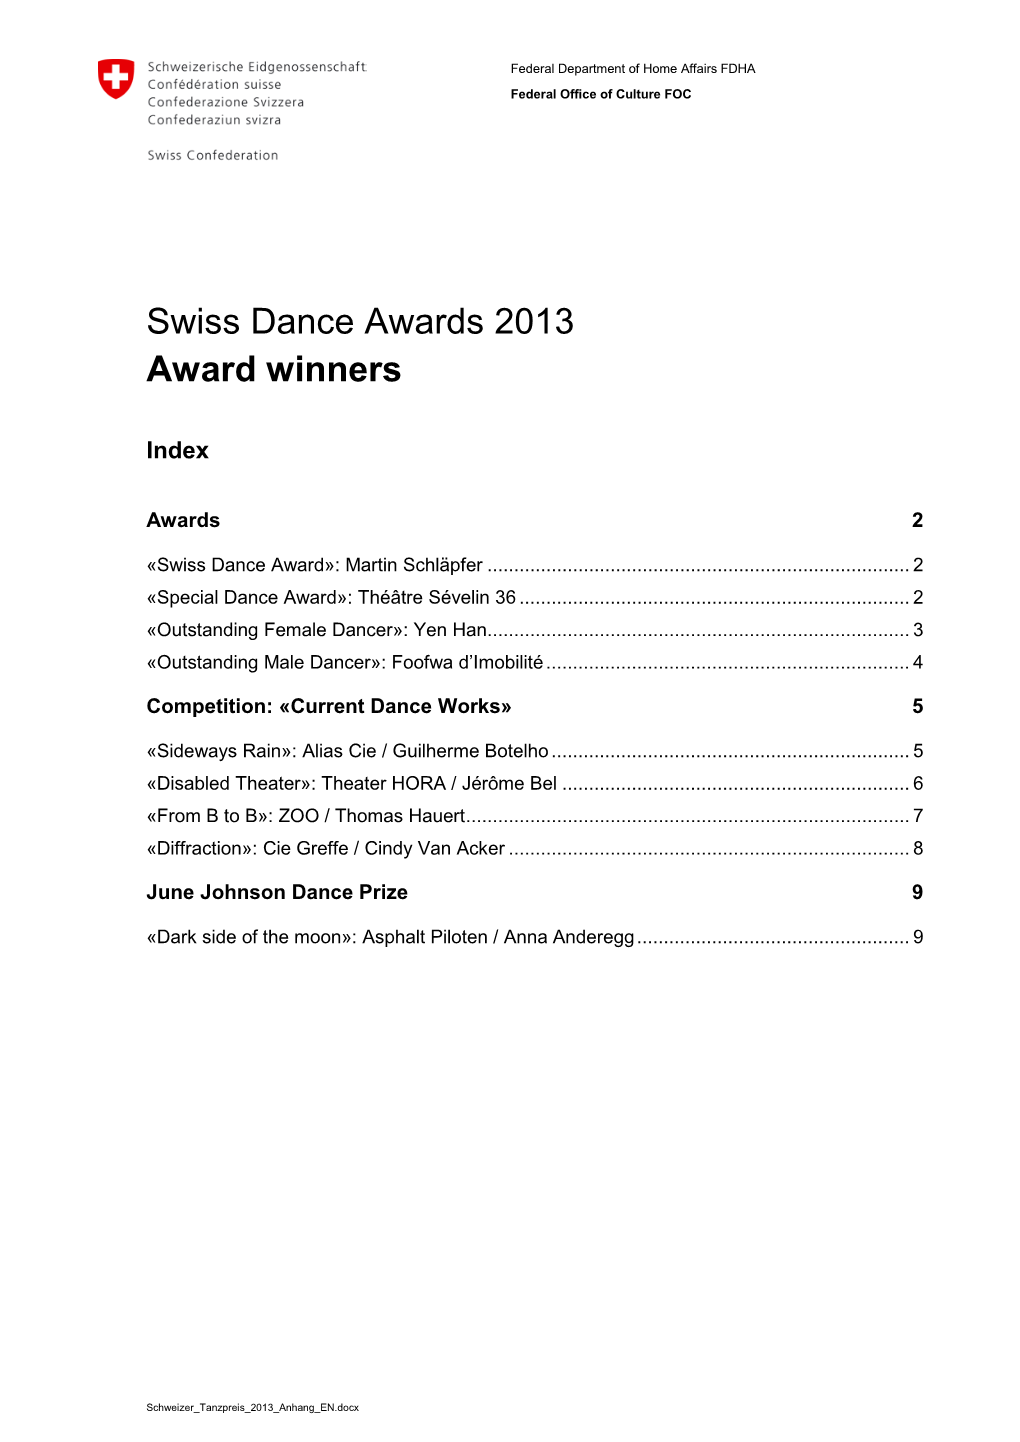 Swiss Dance Awards 2013 Award Winners